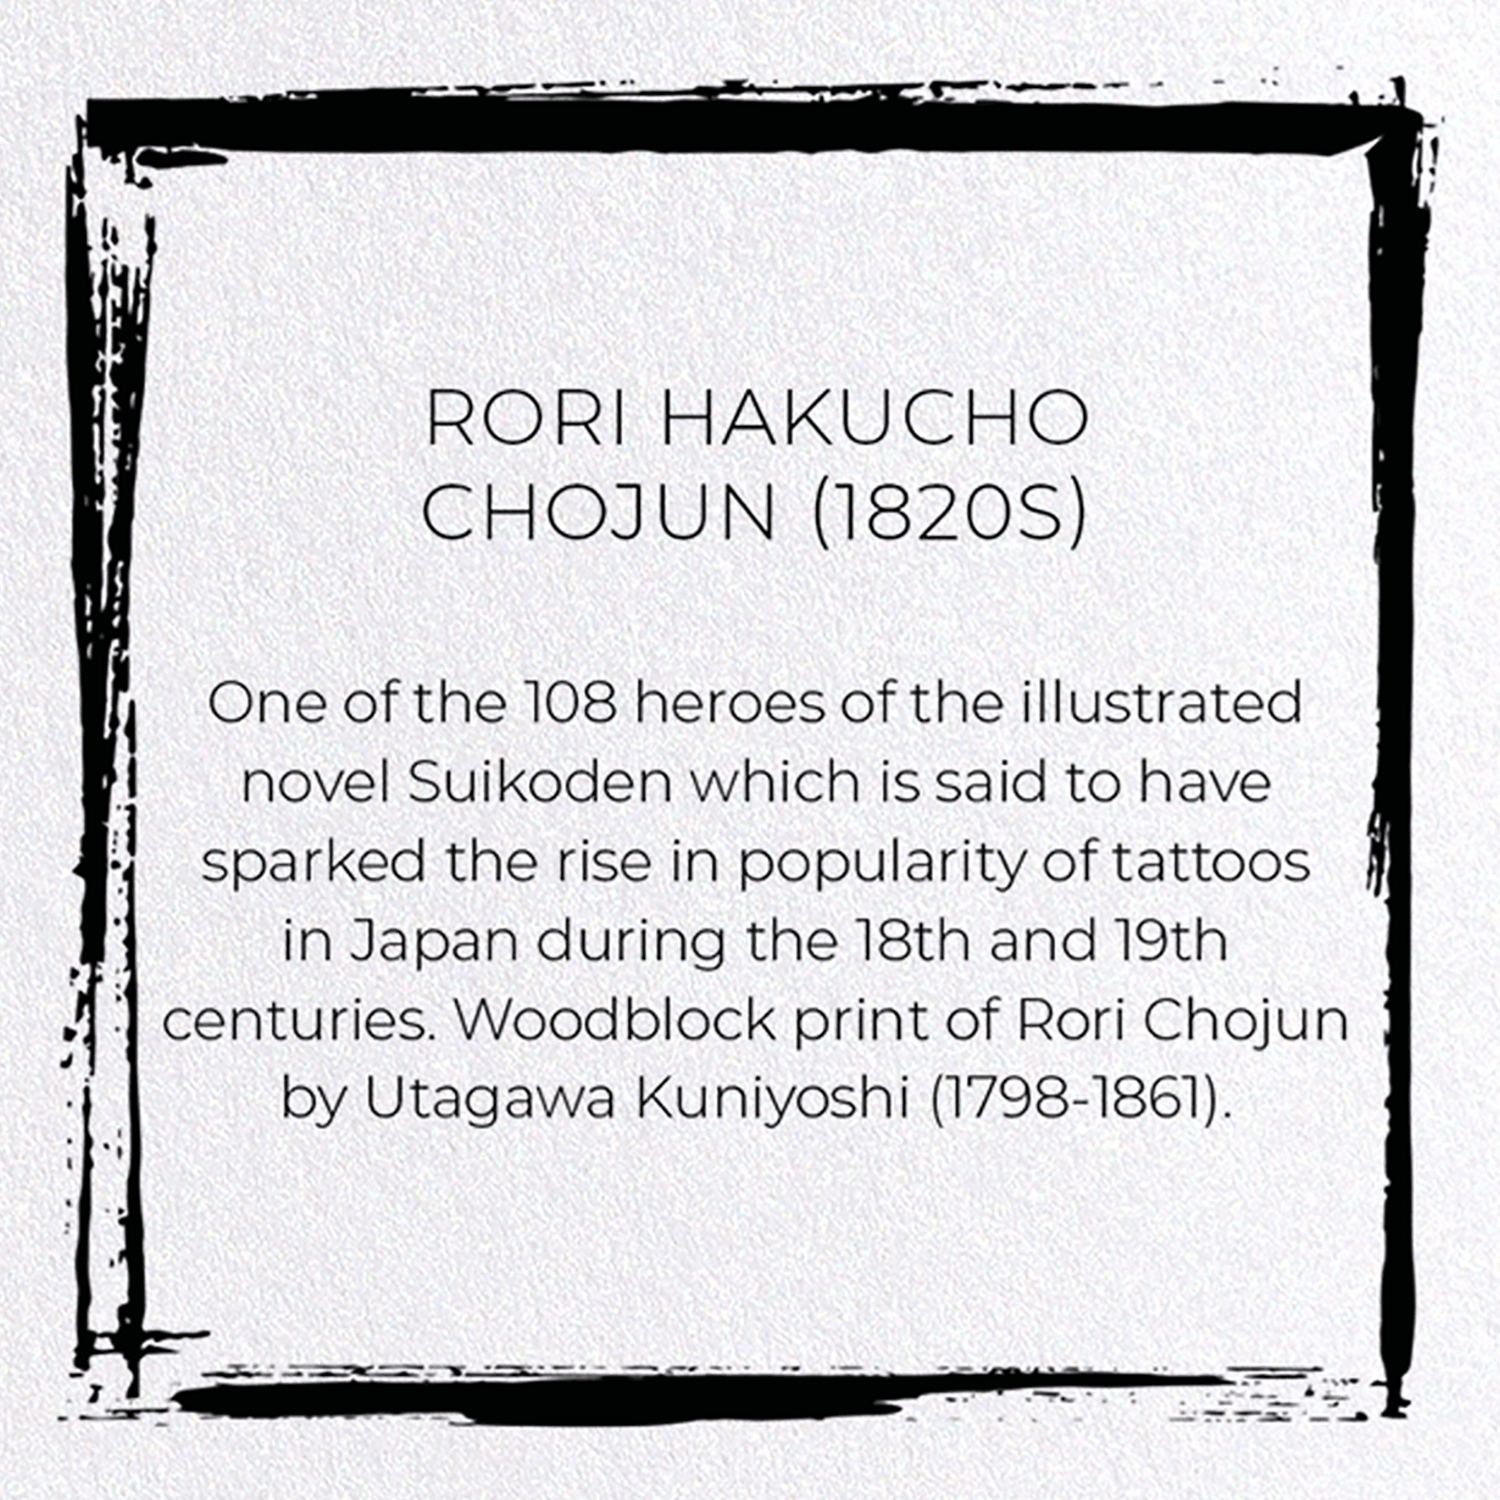 RORI HAKUCHO CHOJUN (1820S)